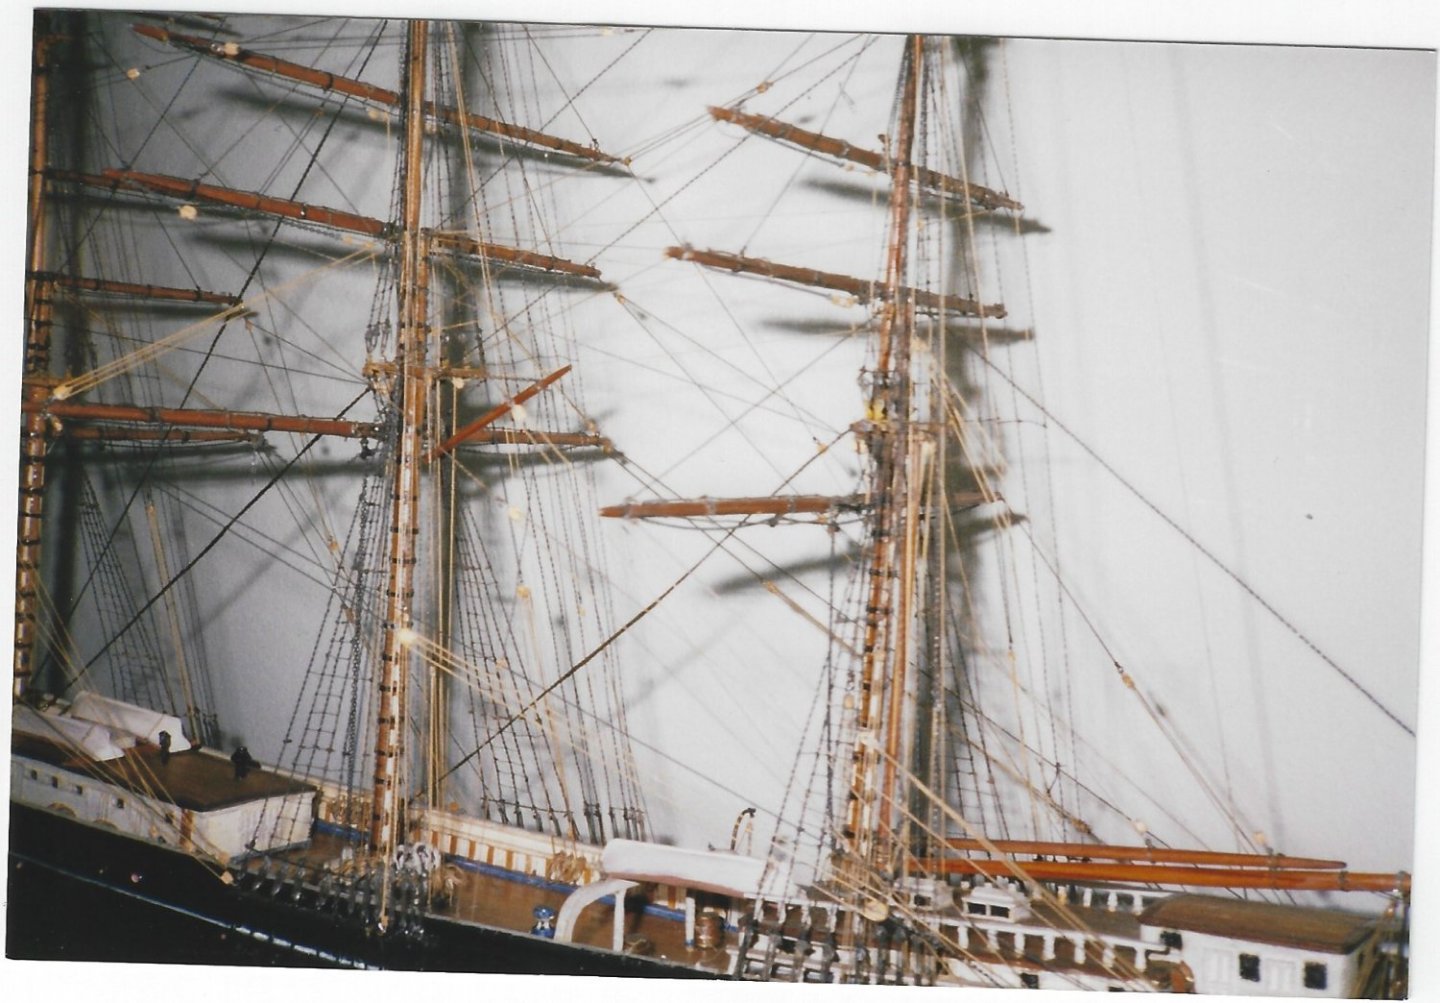 F_ P_ Harlows model of Glory of the Seas photos 3 edit 2.jpg